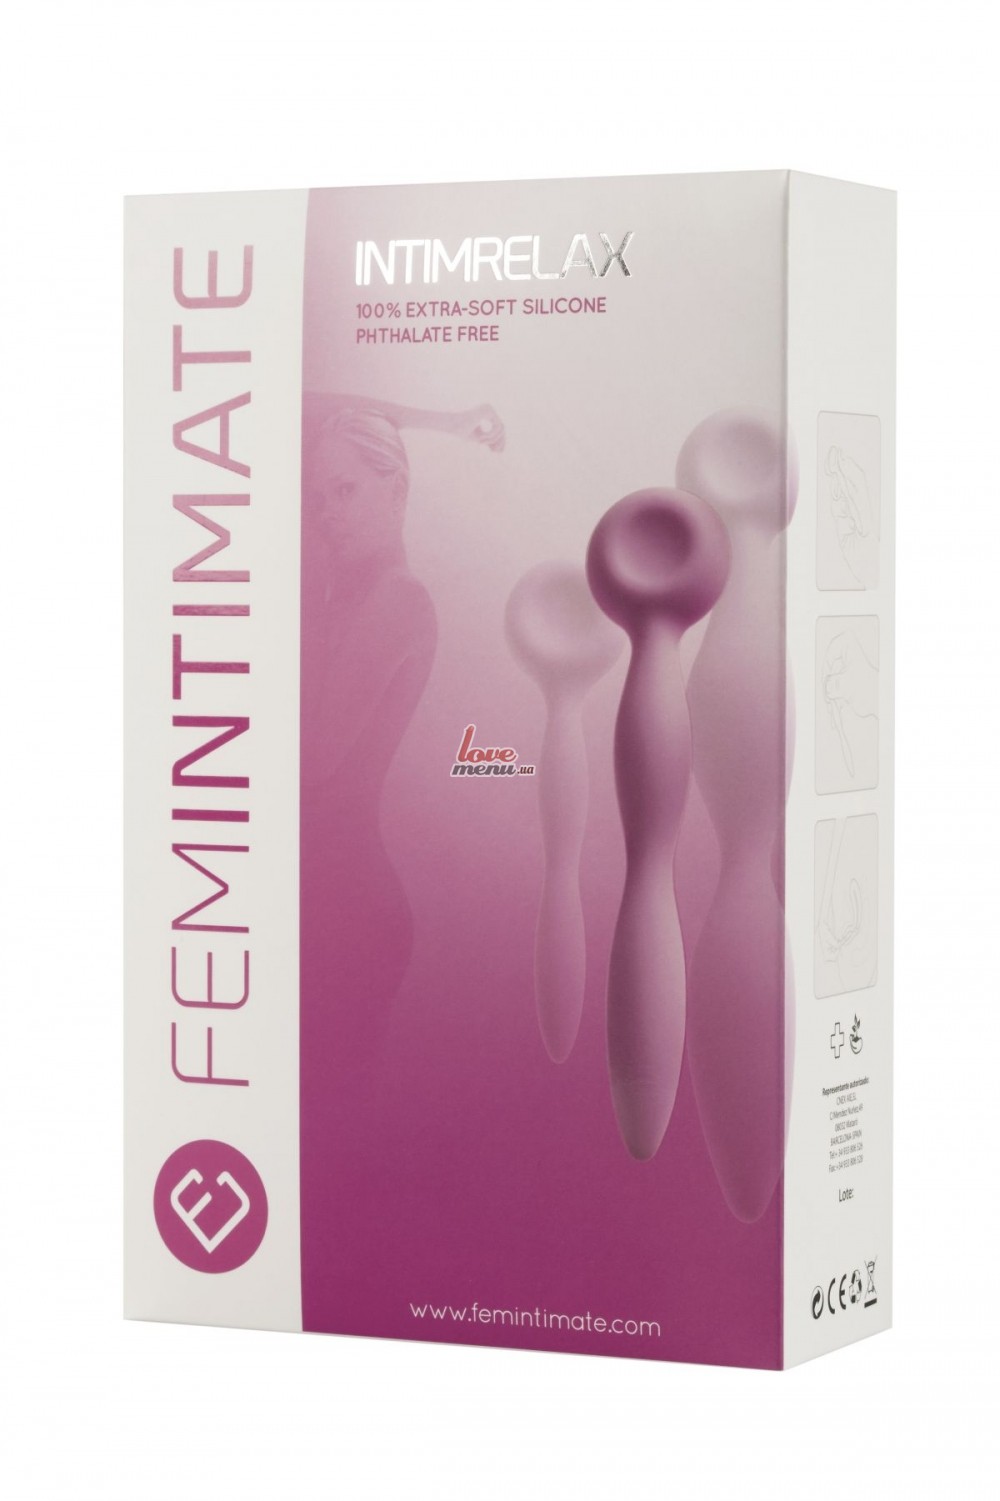 Система восстановления при вагините - Intimrelax - 1